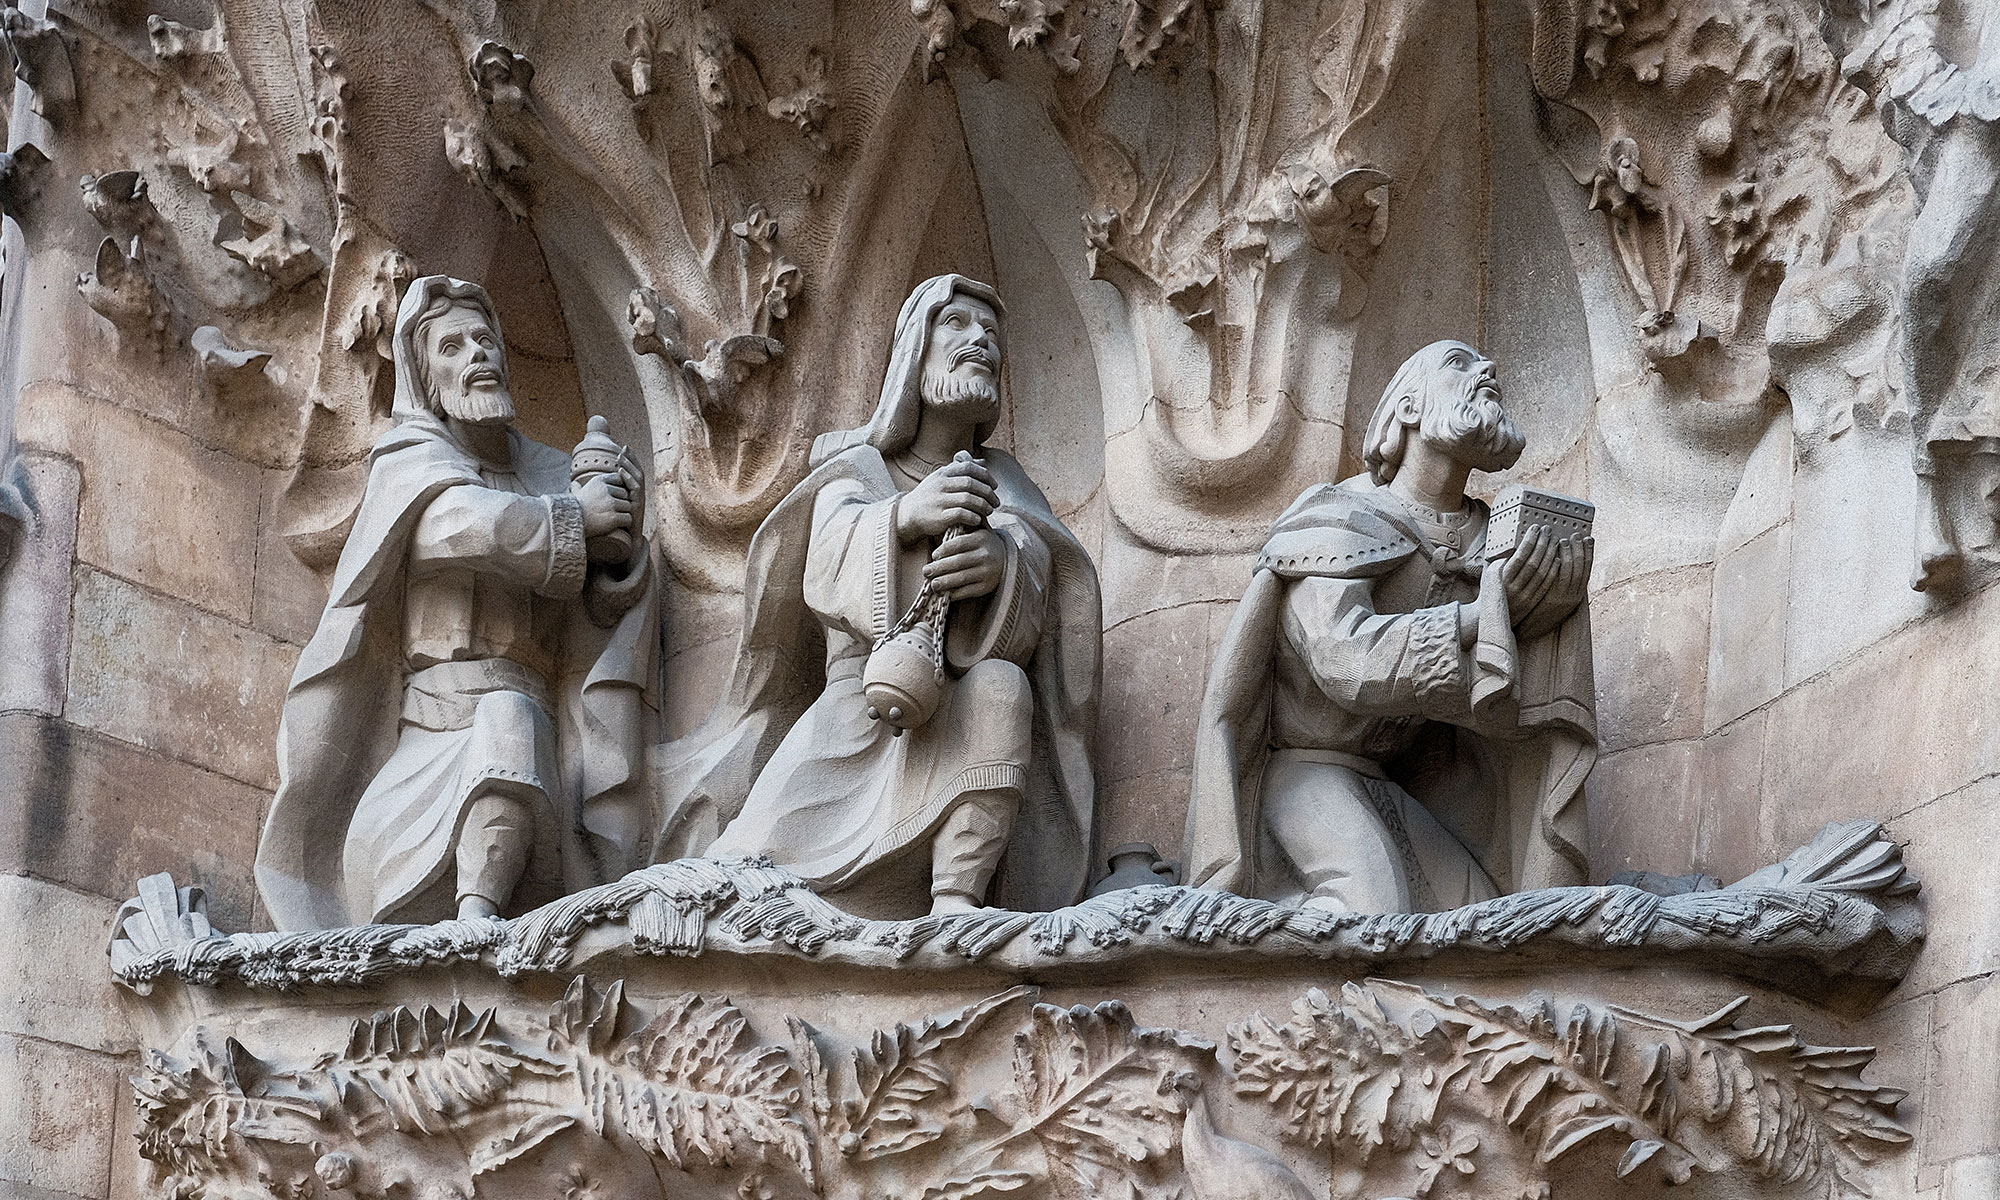 Magi sculptures on Nativity façade of Sagrada Familia